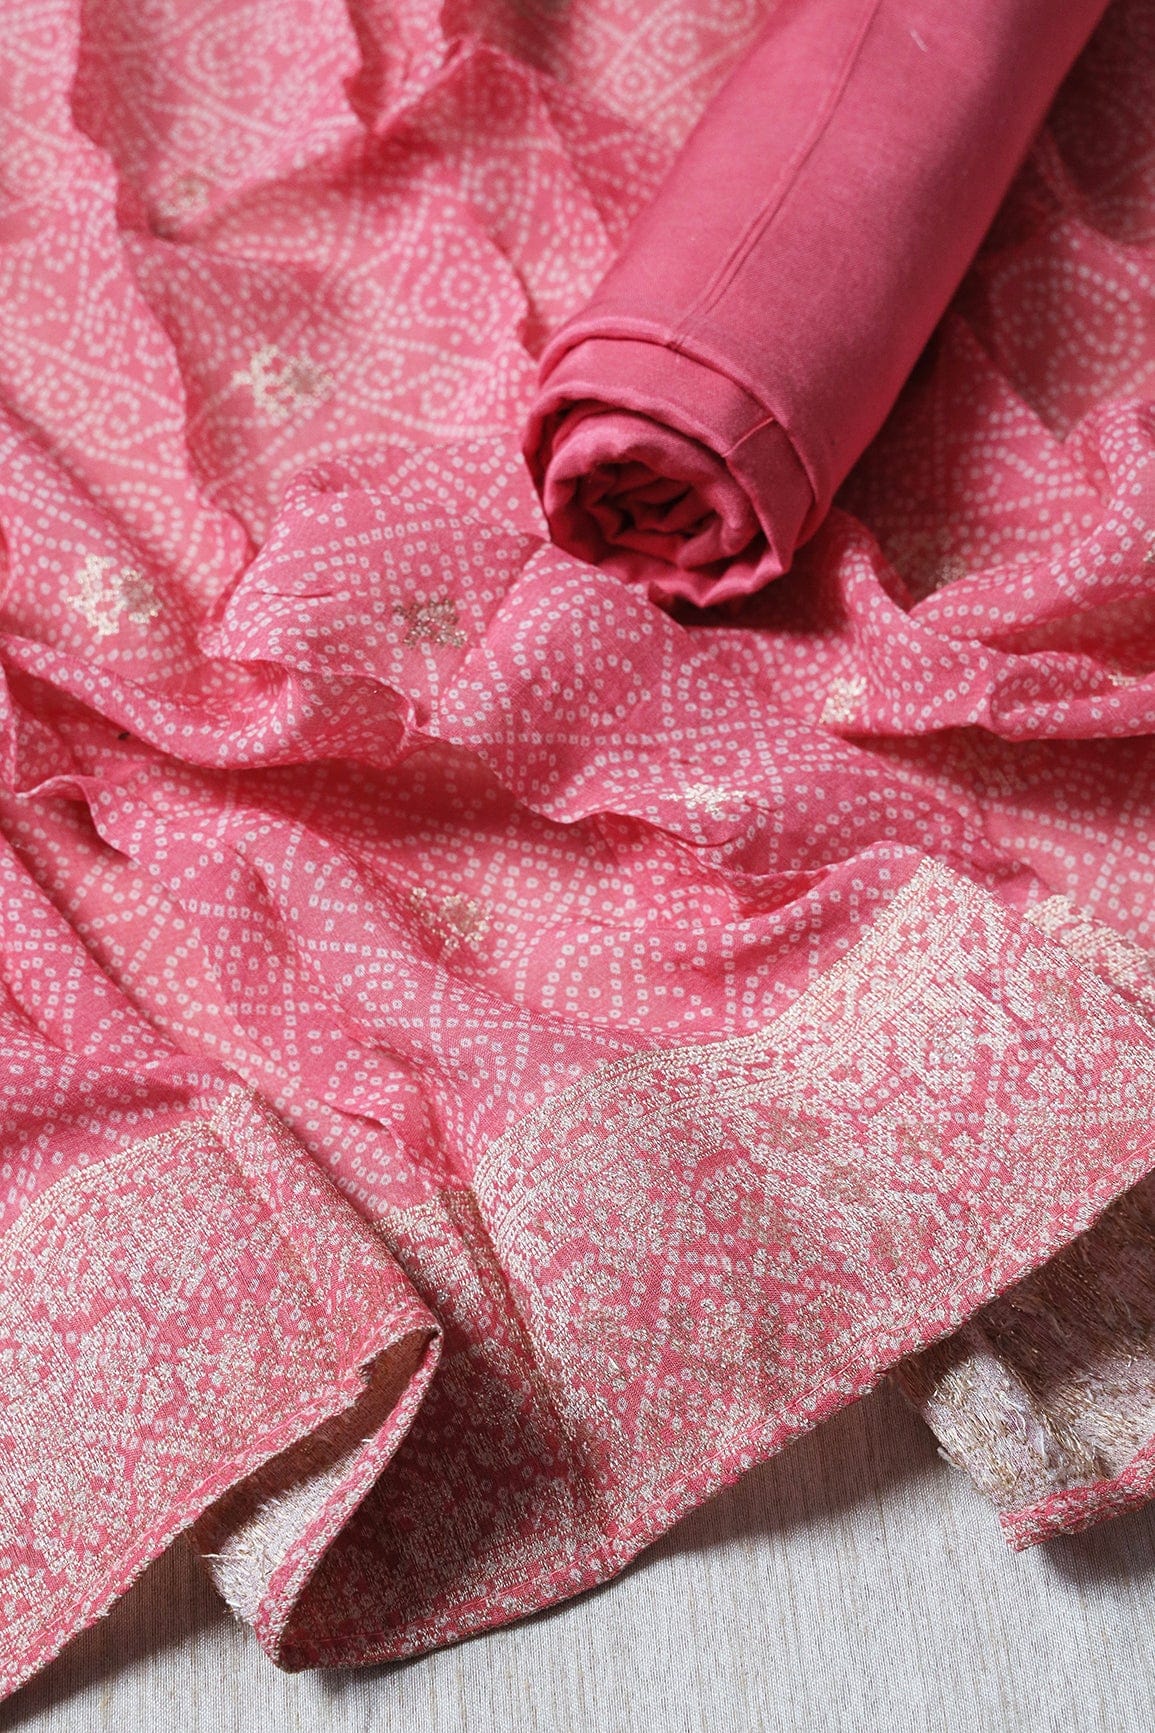 doeraa Semi Stitched Pink Semi Stitched Pure Linen Jacquard Suit Set (3 piece)